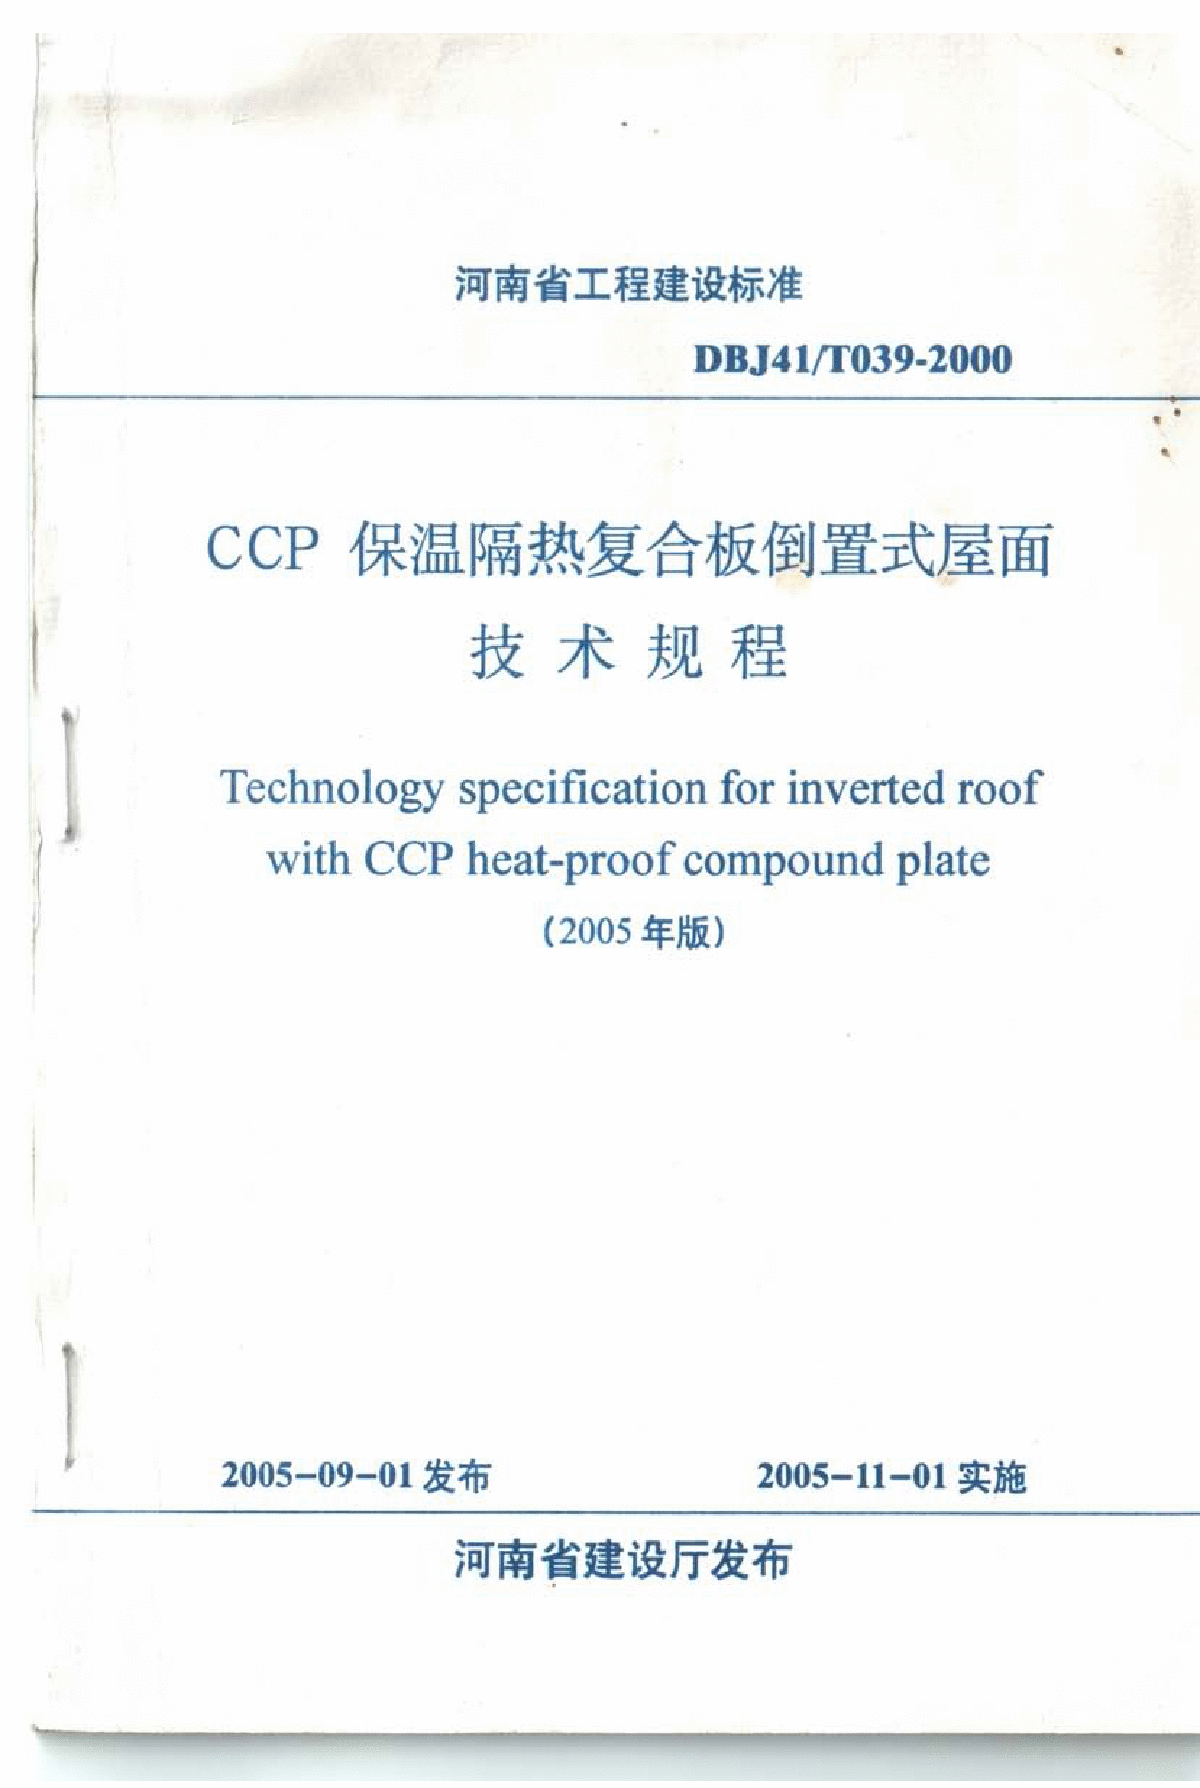 DBJ41T039-2000CCP保温隔热复合板倒置式屋面技术规程-图一